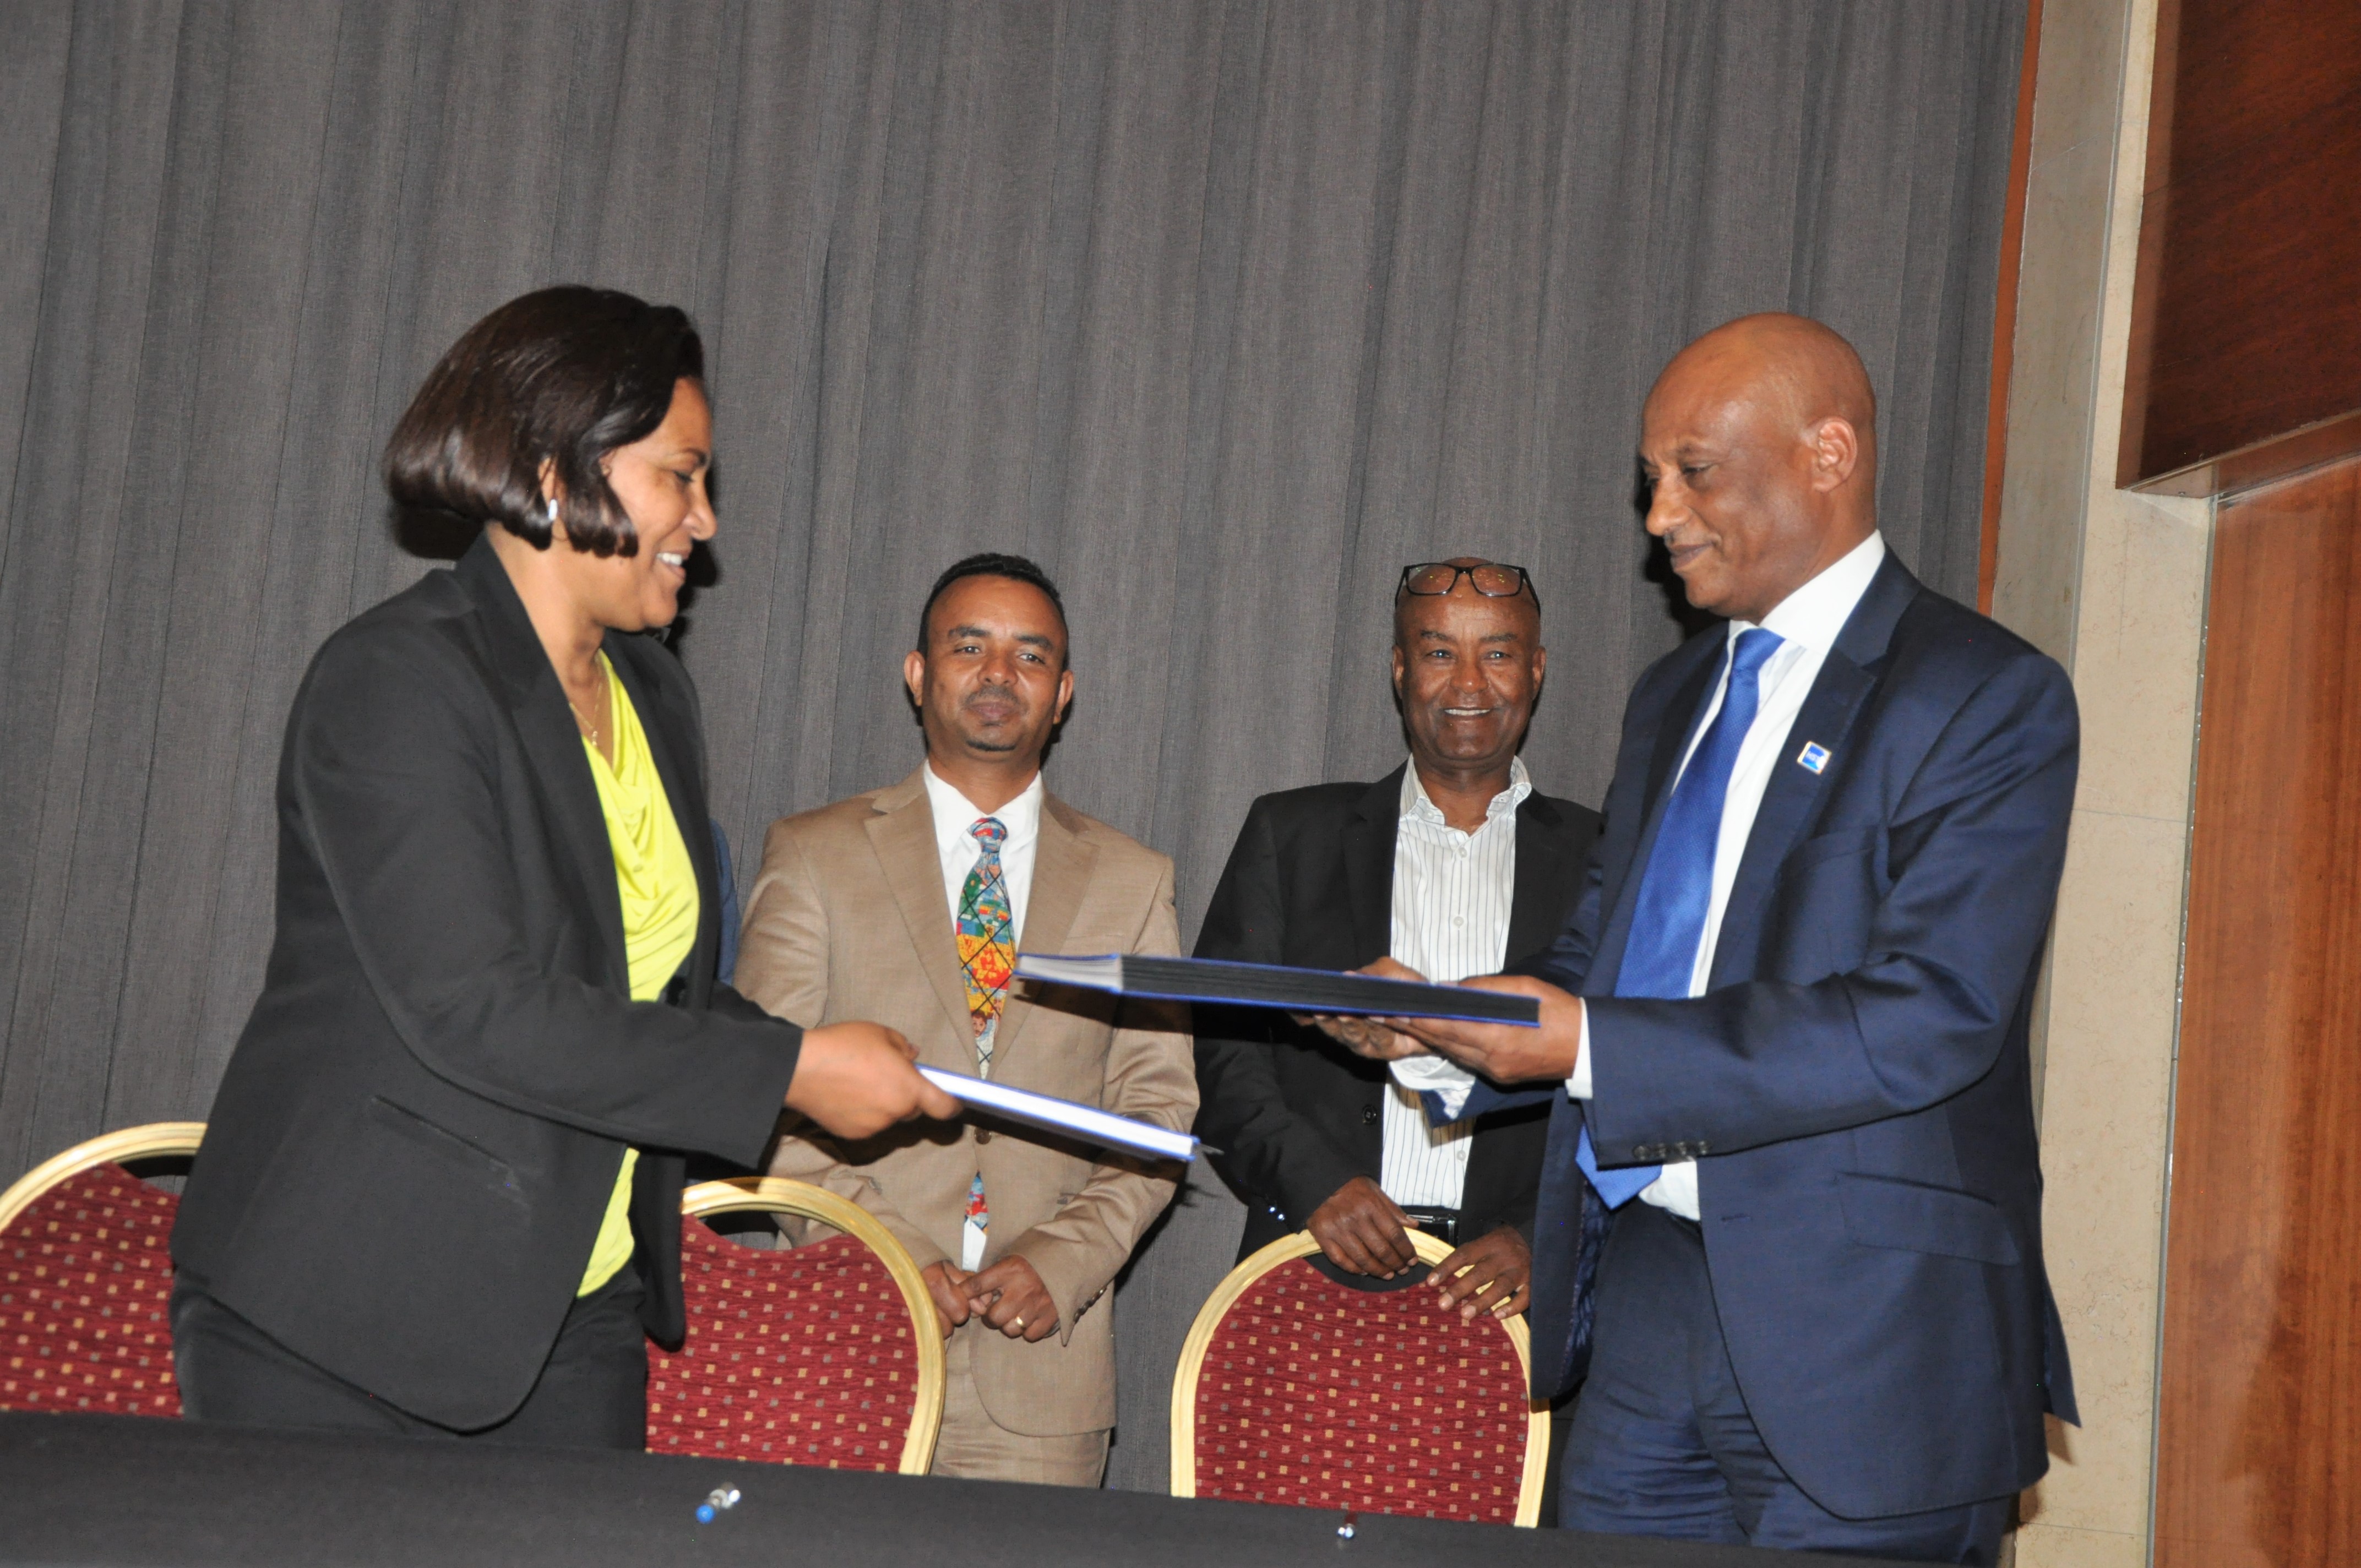 HST & EMI (Ethiopian Management Institute) signed on MoU 